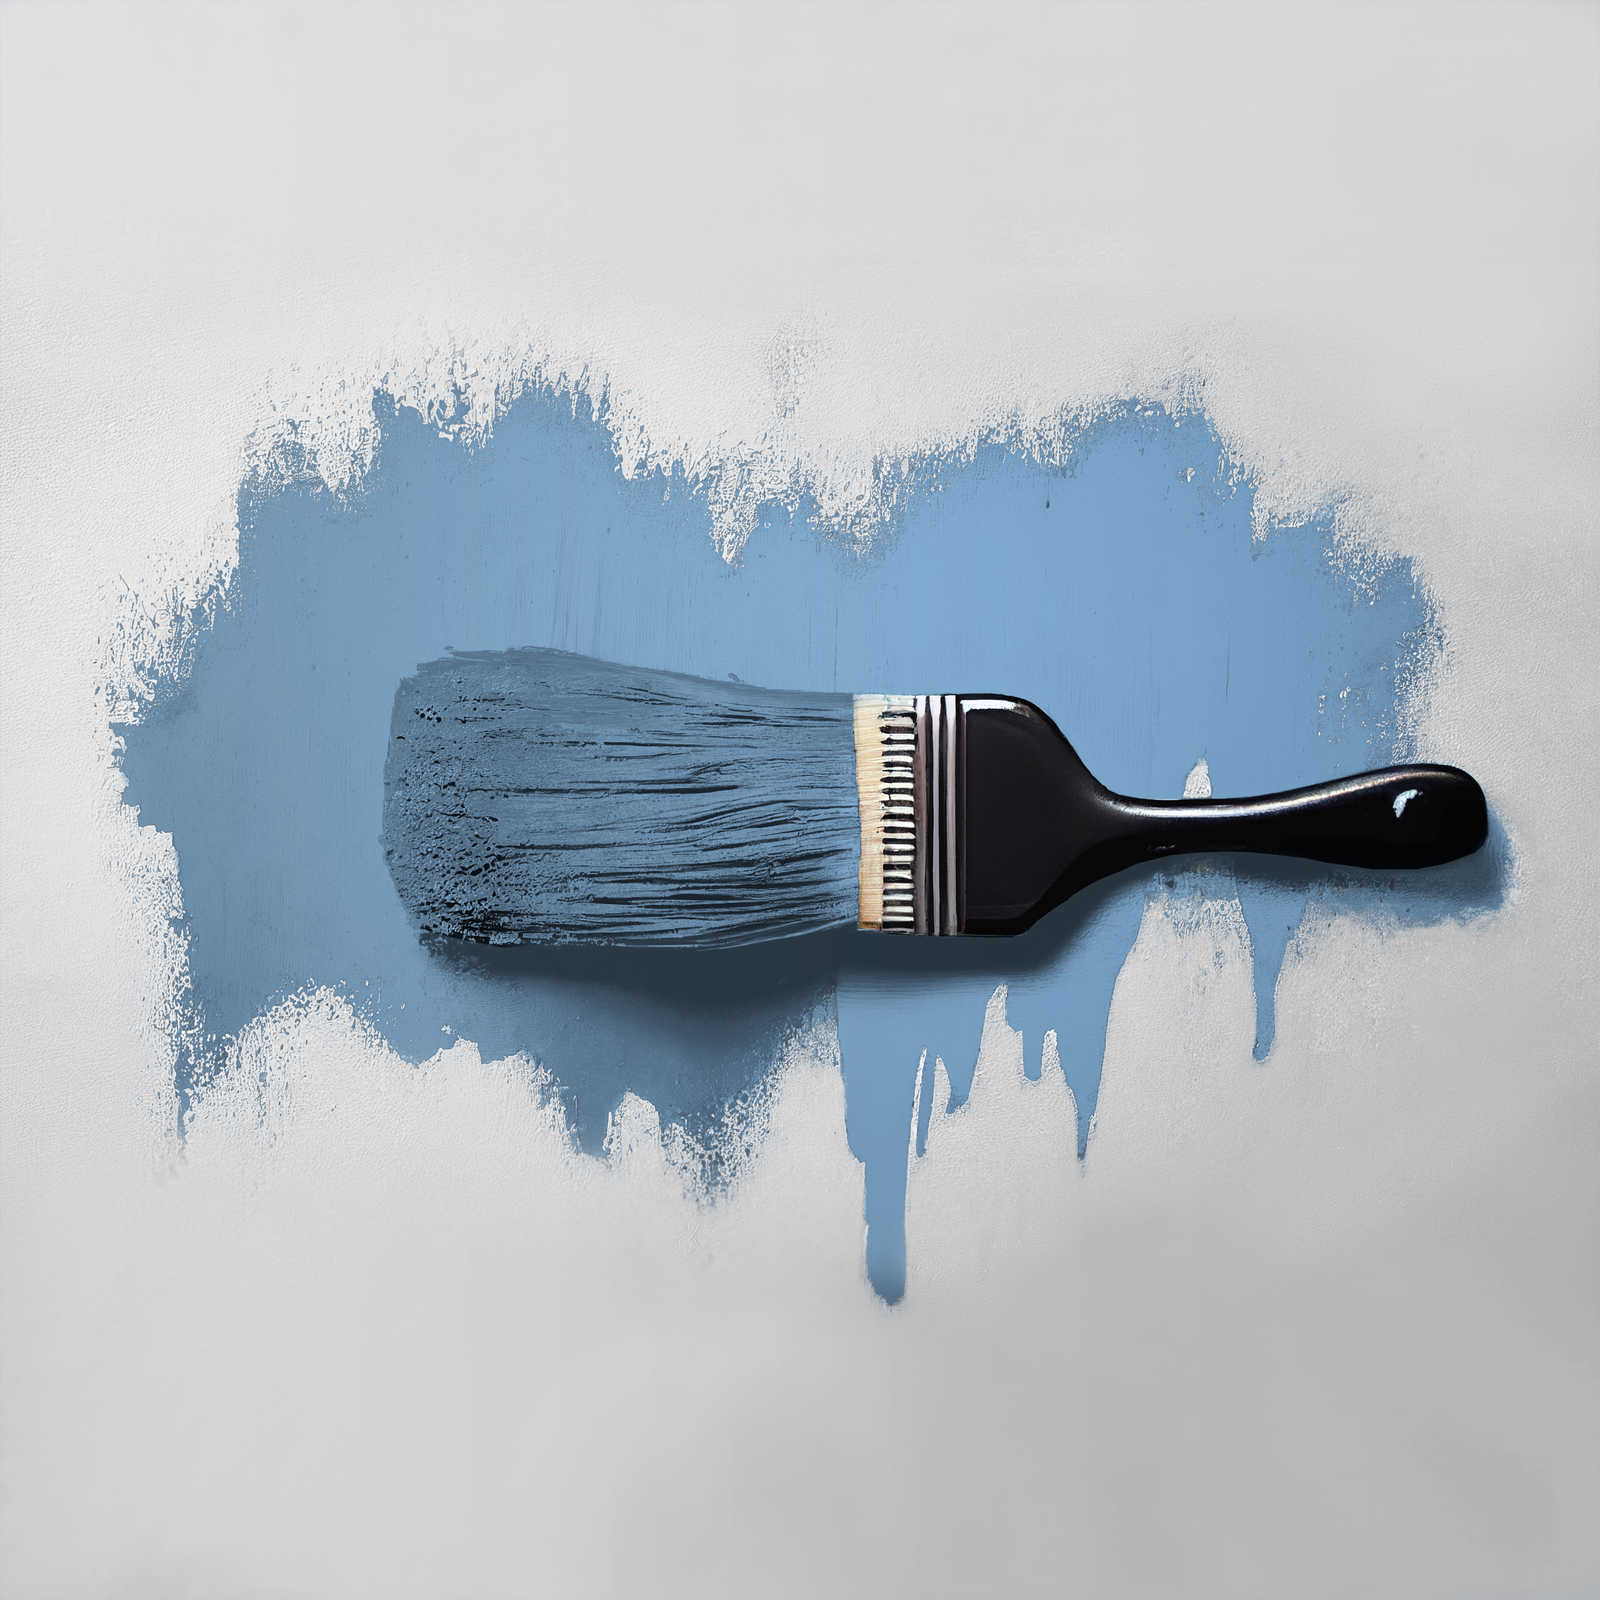             Pintura mural TCK3004 »Blue Herring« en azul paloma radiante – 5,0 litro
        